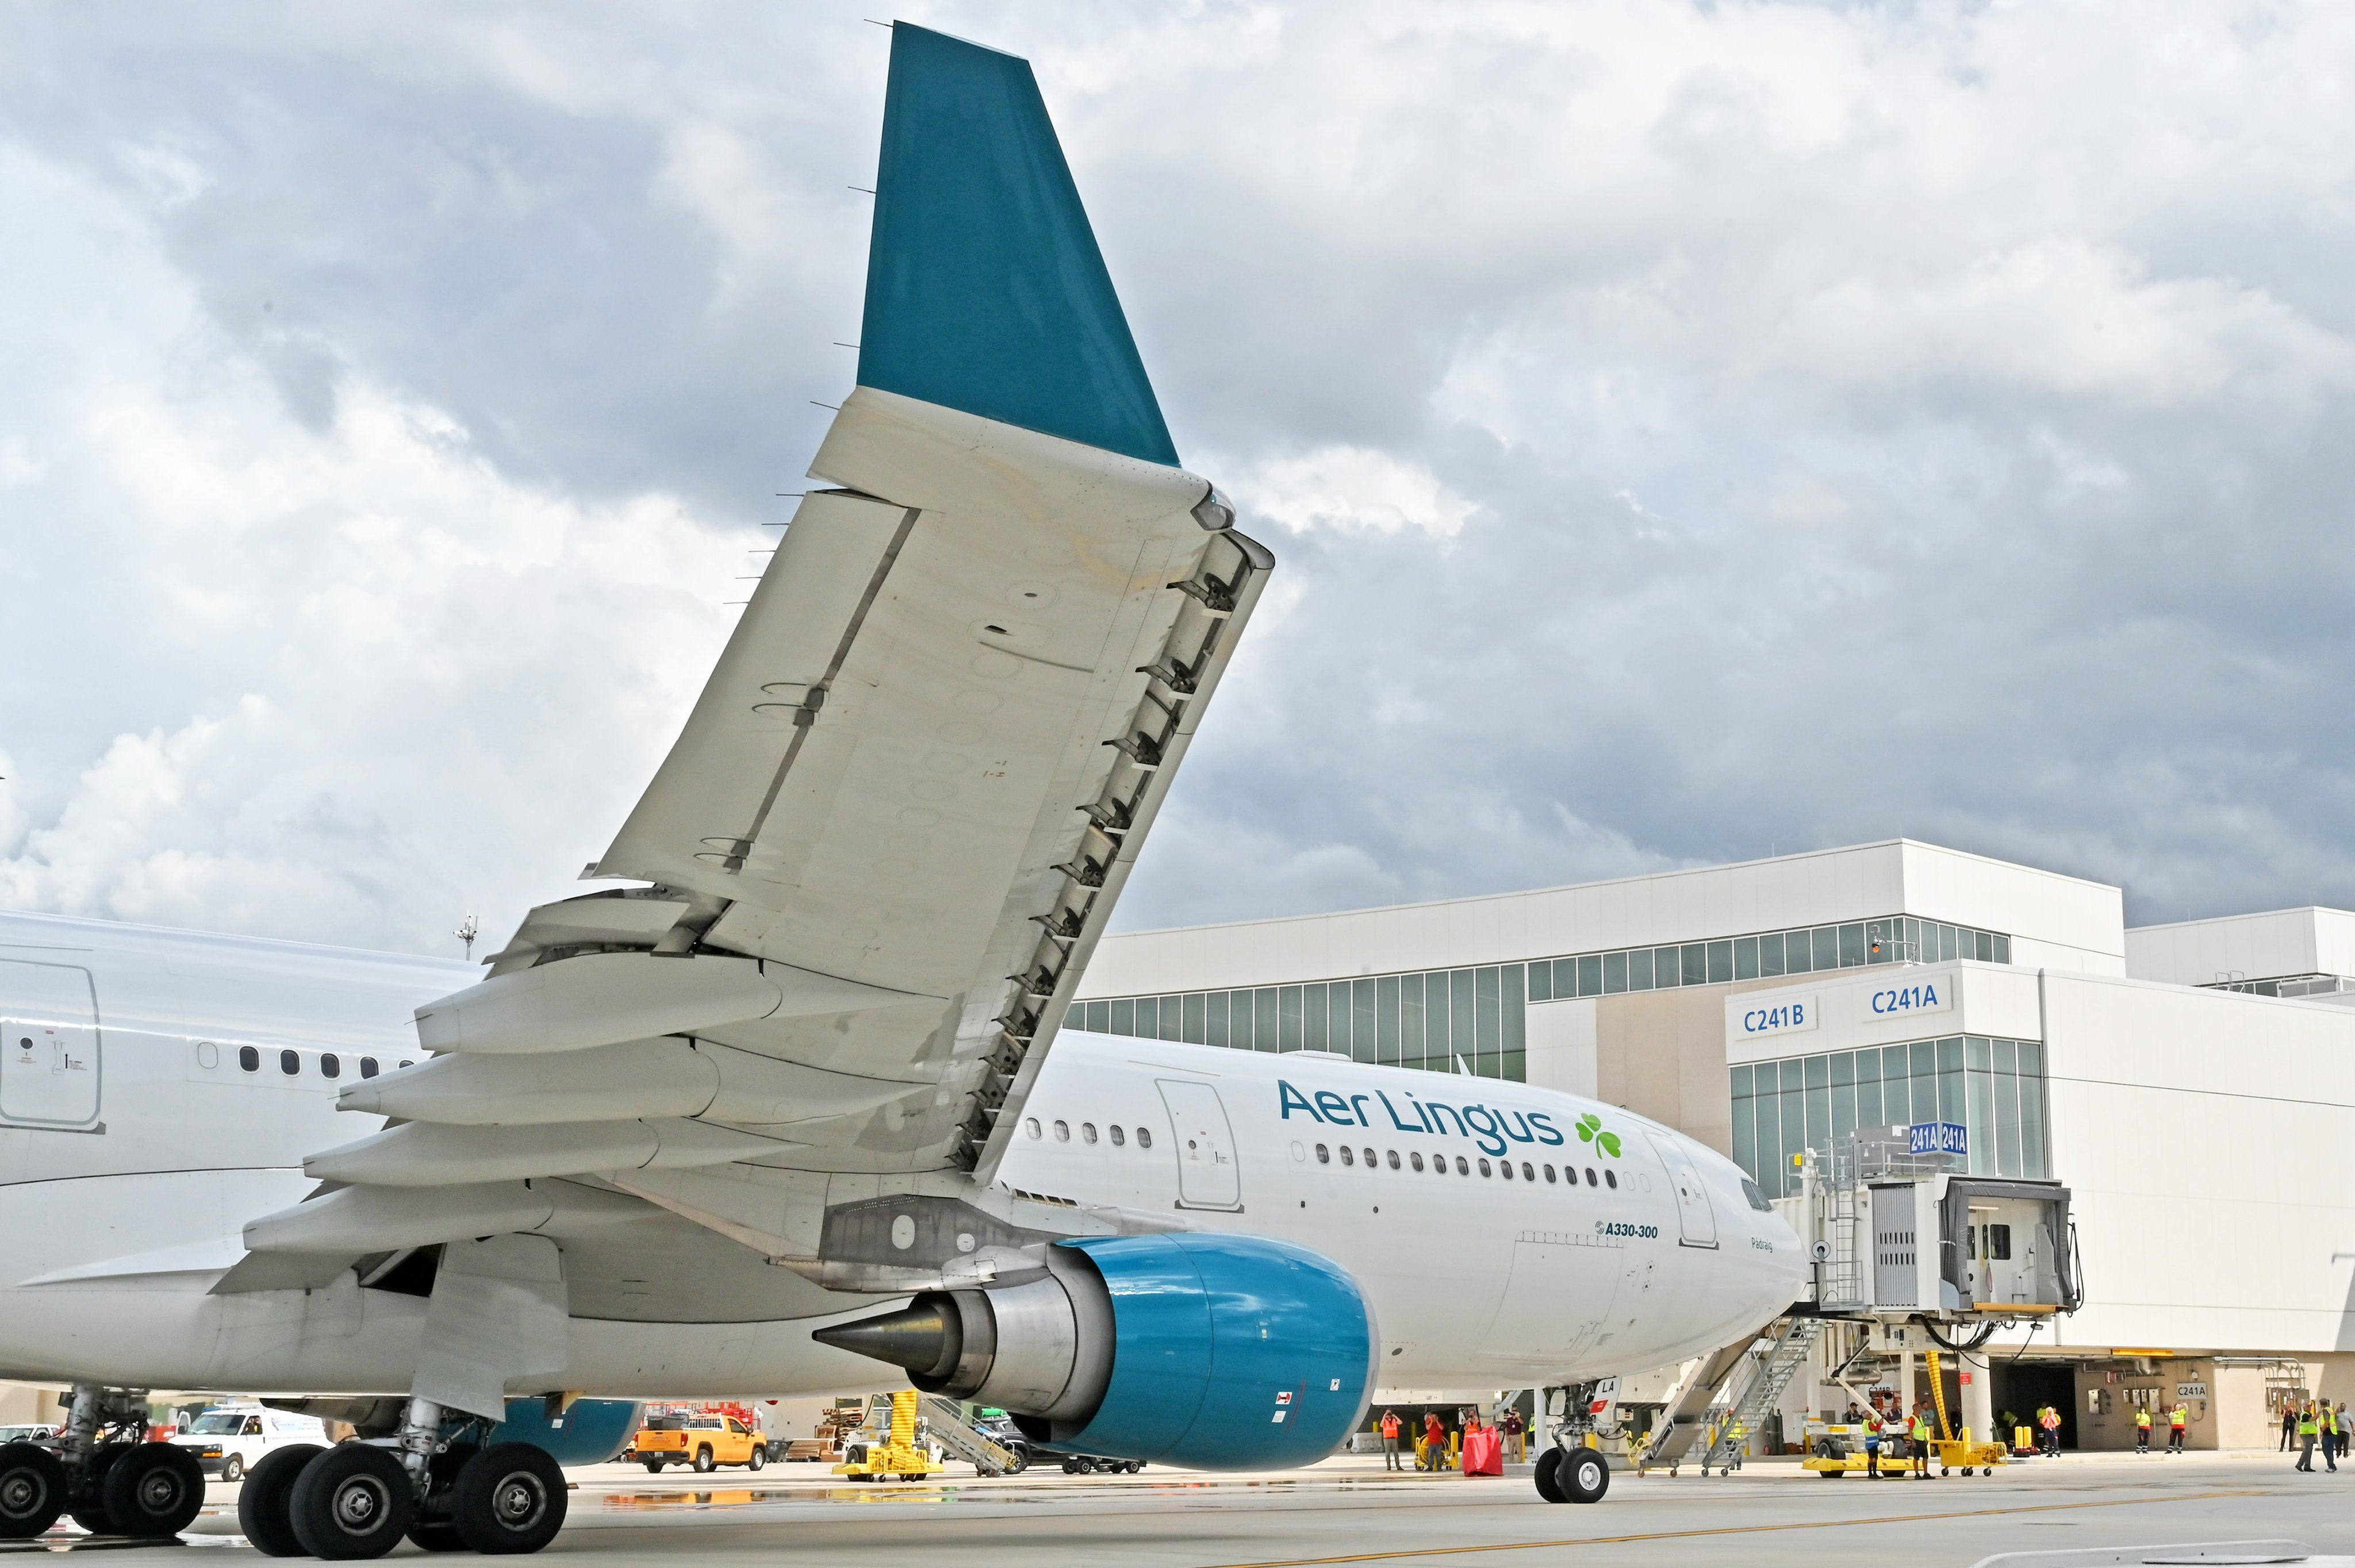 An Aer Lingus Airbus A330-300 aircraft parking in Terminal C at Orlando International Airport. 